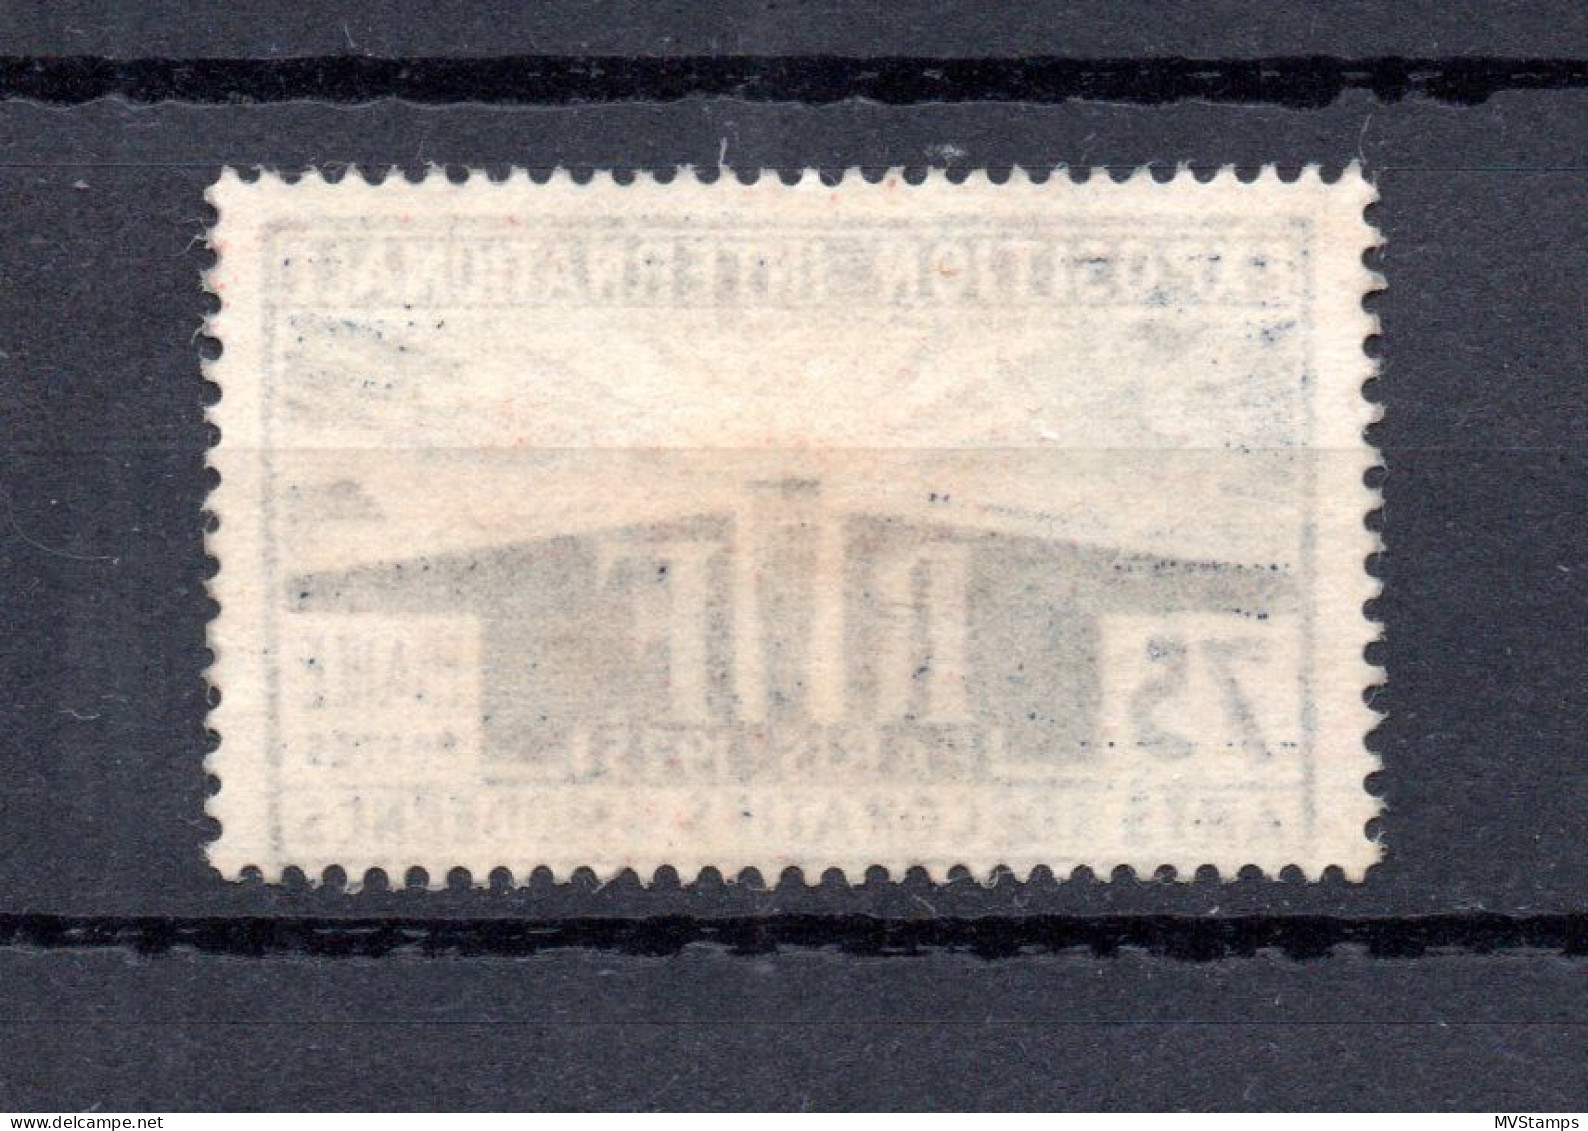 France 1925 Old Art Exhibition Paris Stamp (Michel 180) Nice MNH - Ongebruikt